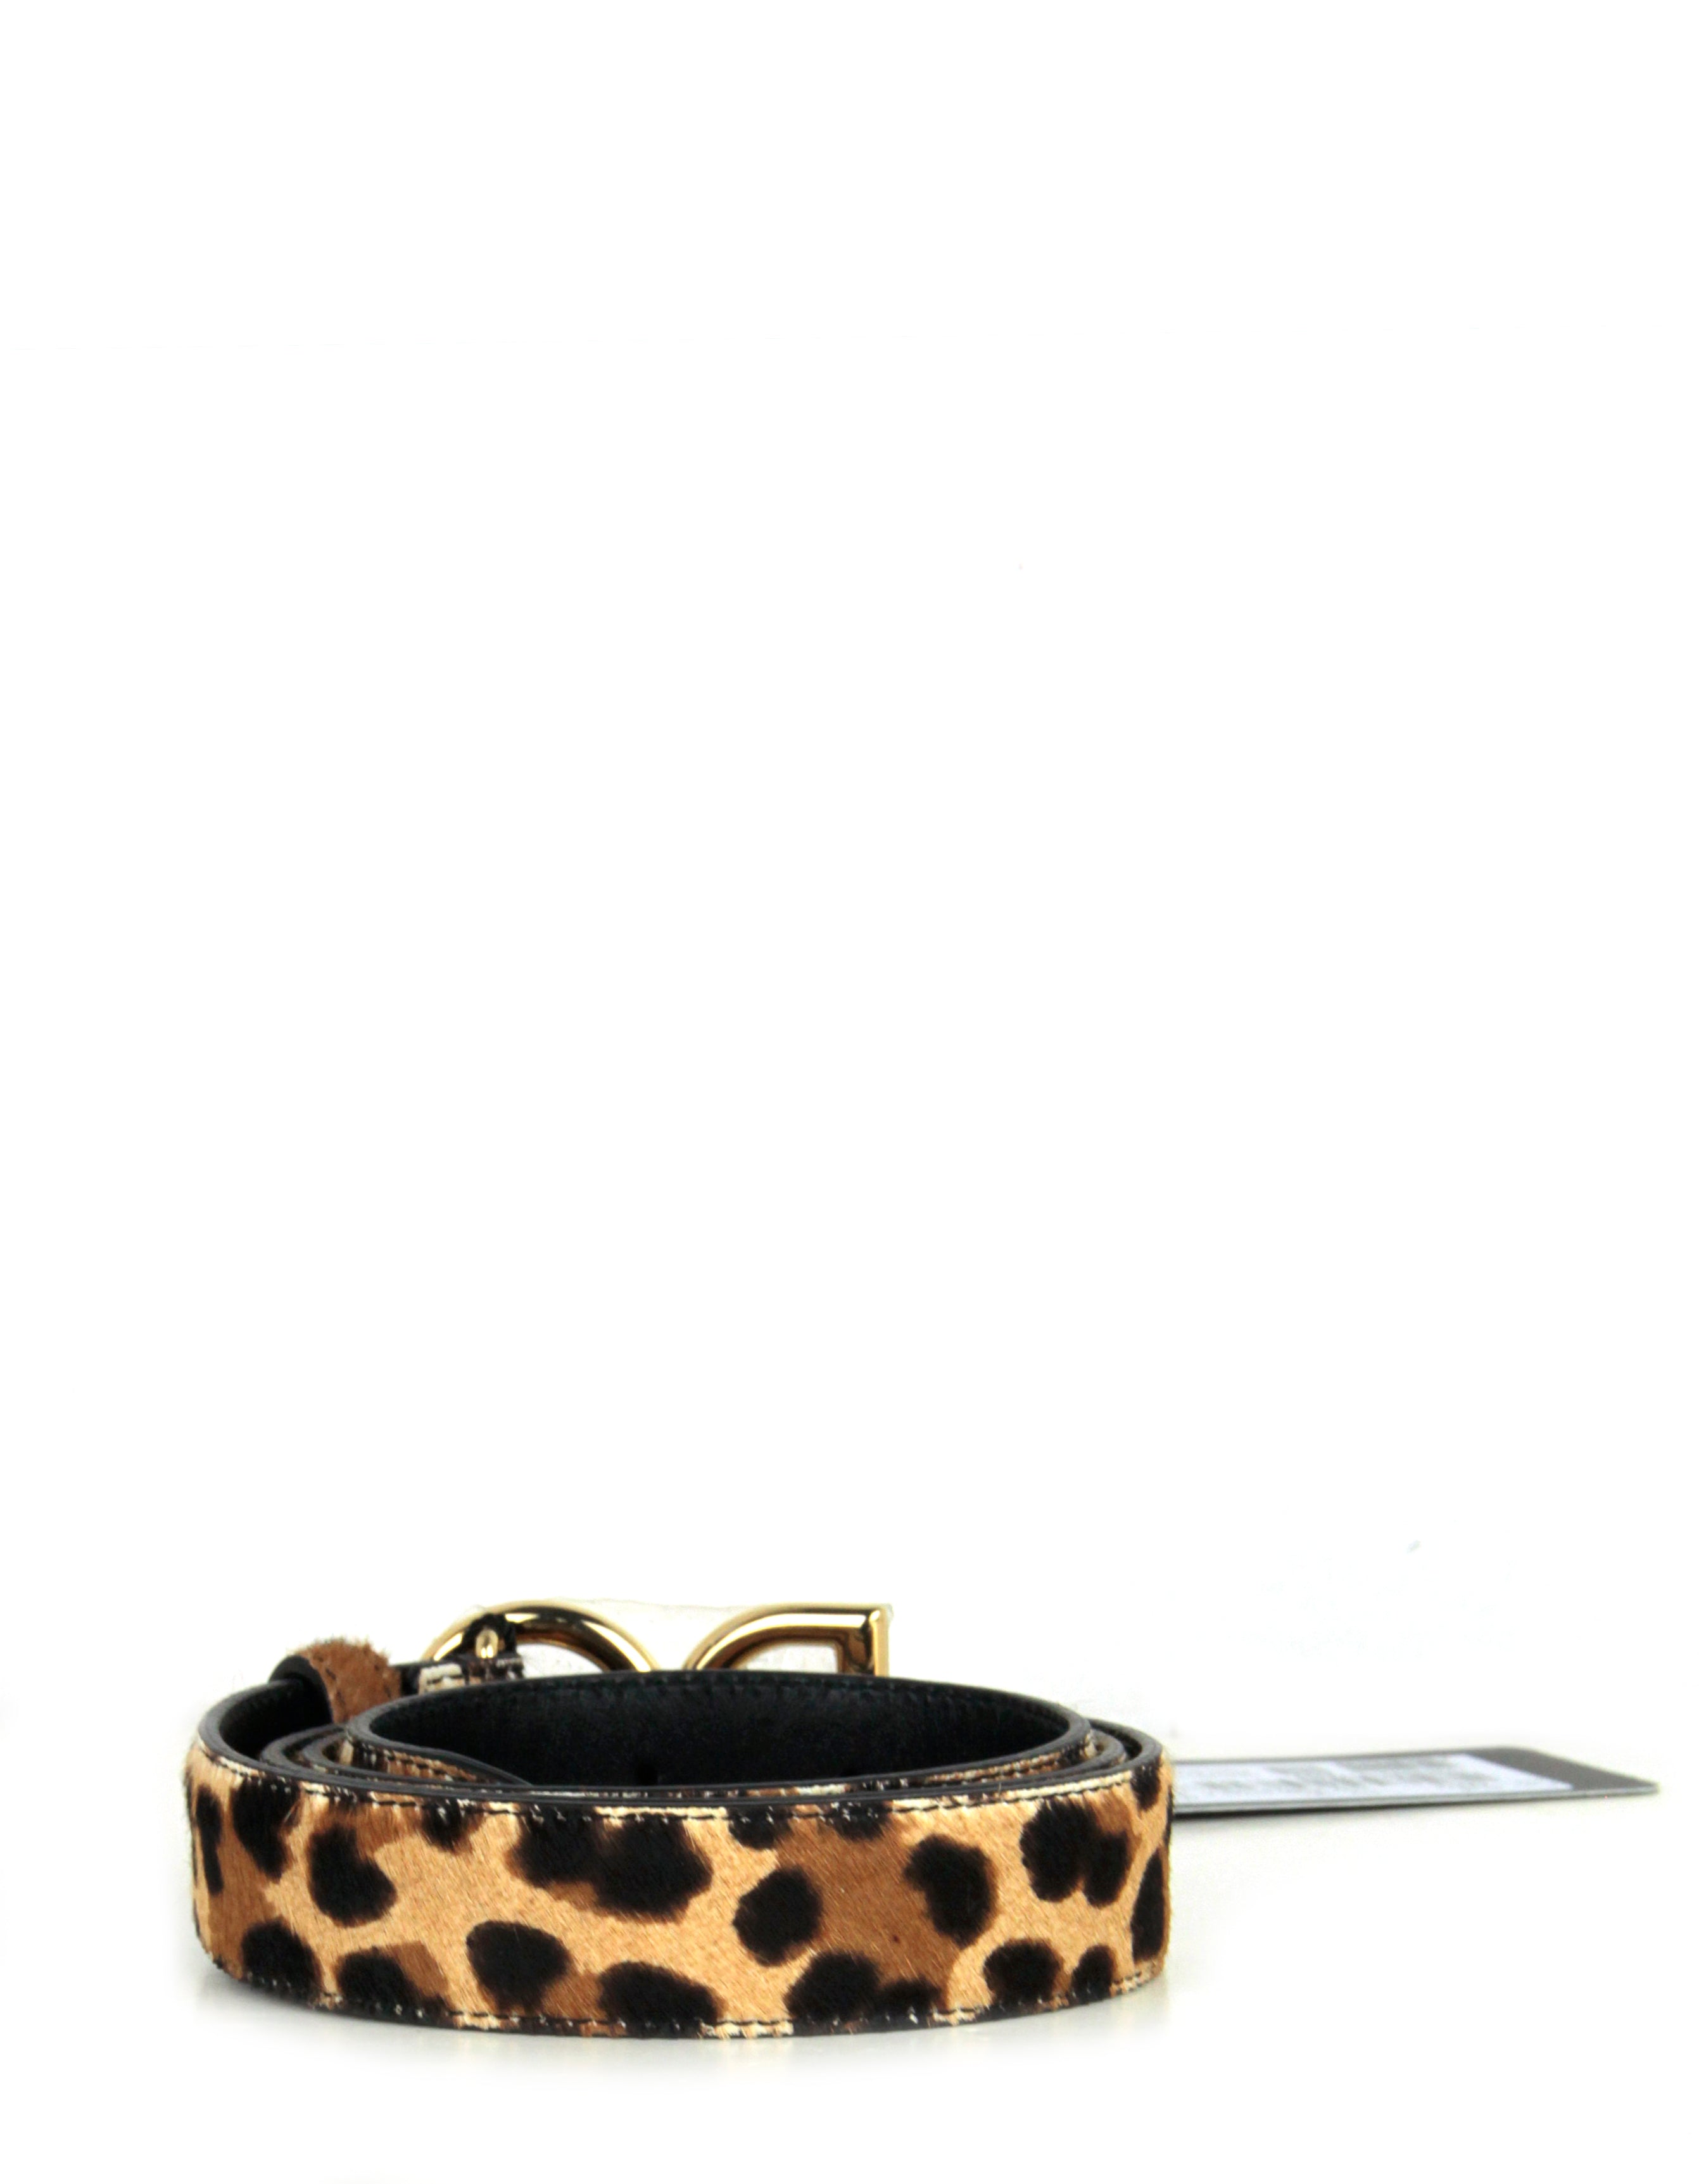 Dolce & Gabbana NWT Leopard Print Pony Hair Logo Buckle Belt sz 85/34